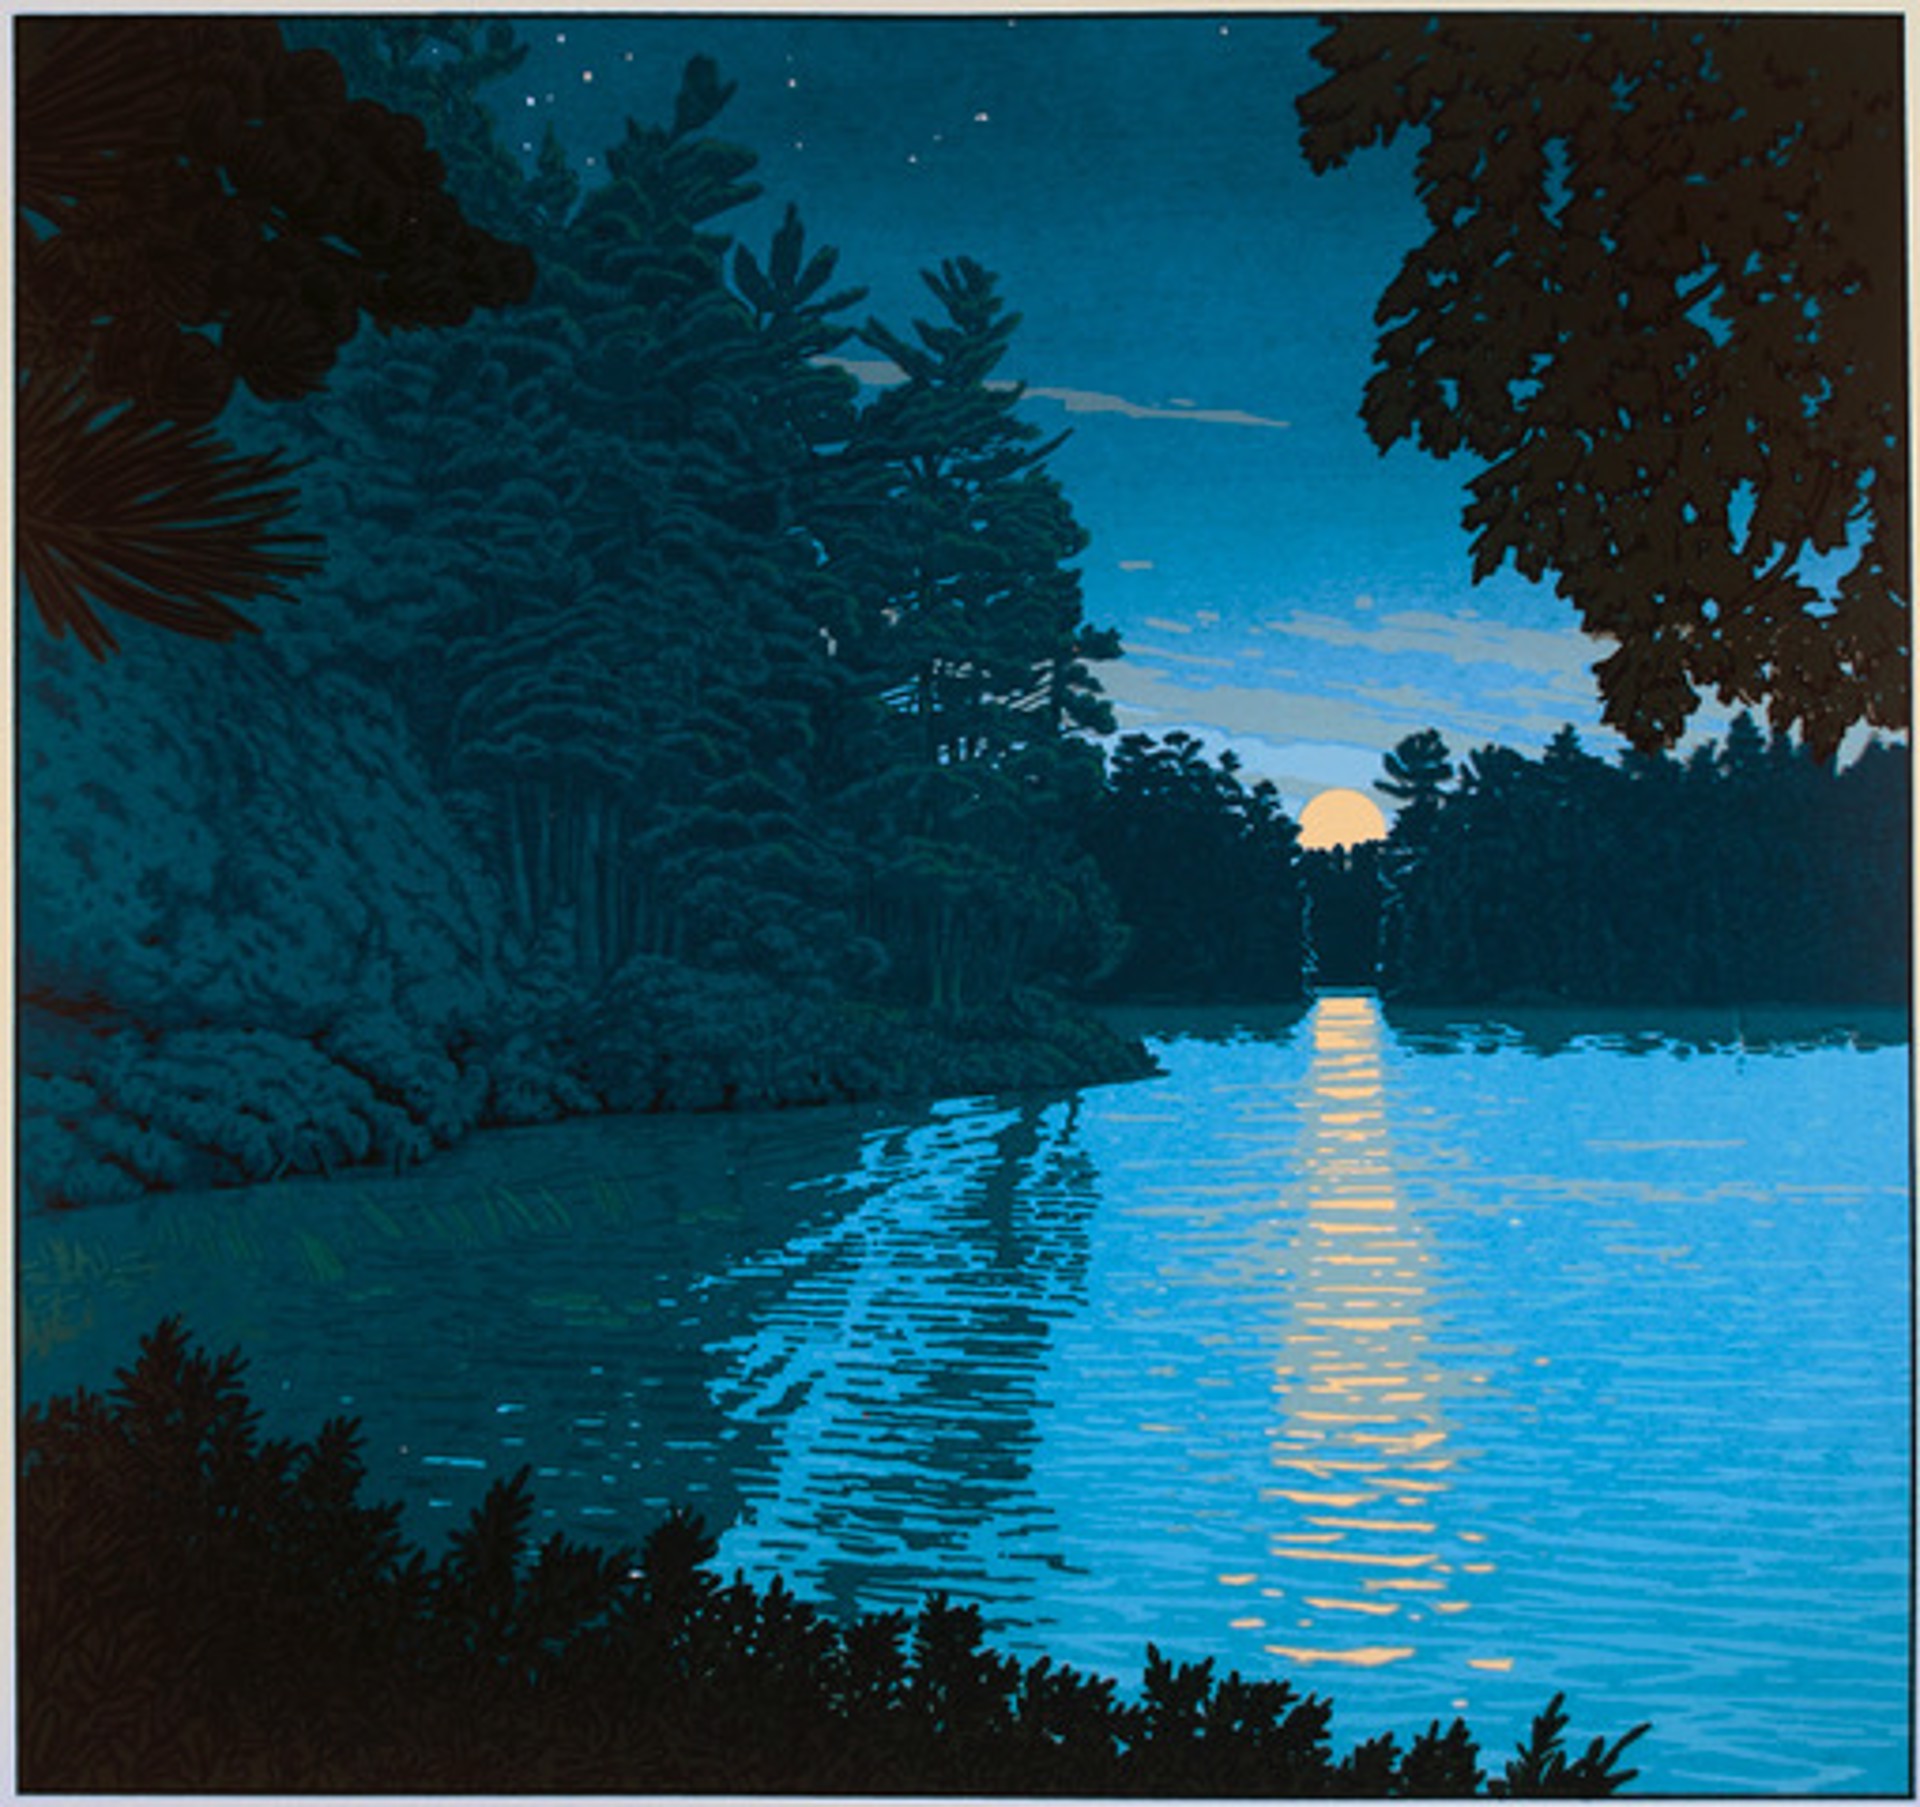 Moonrise on North Bay by John S. Miller